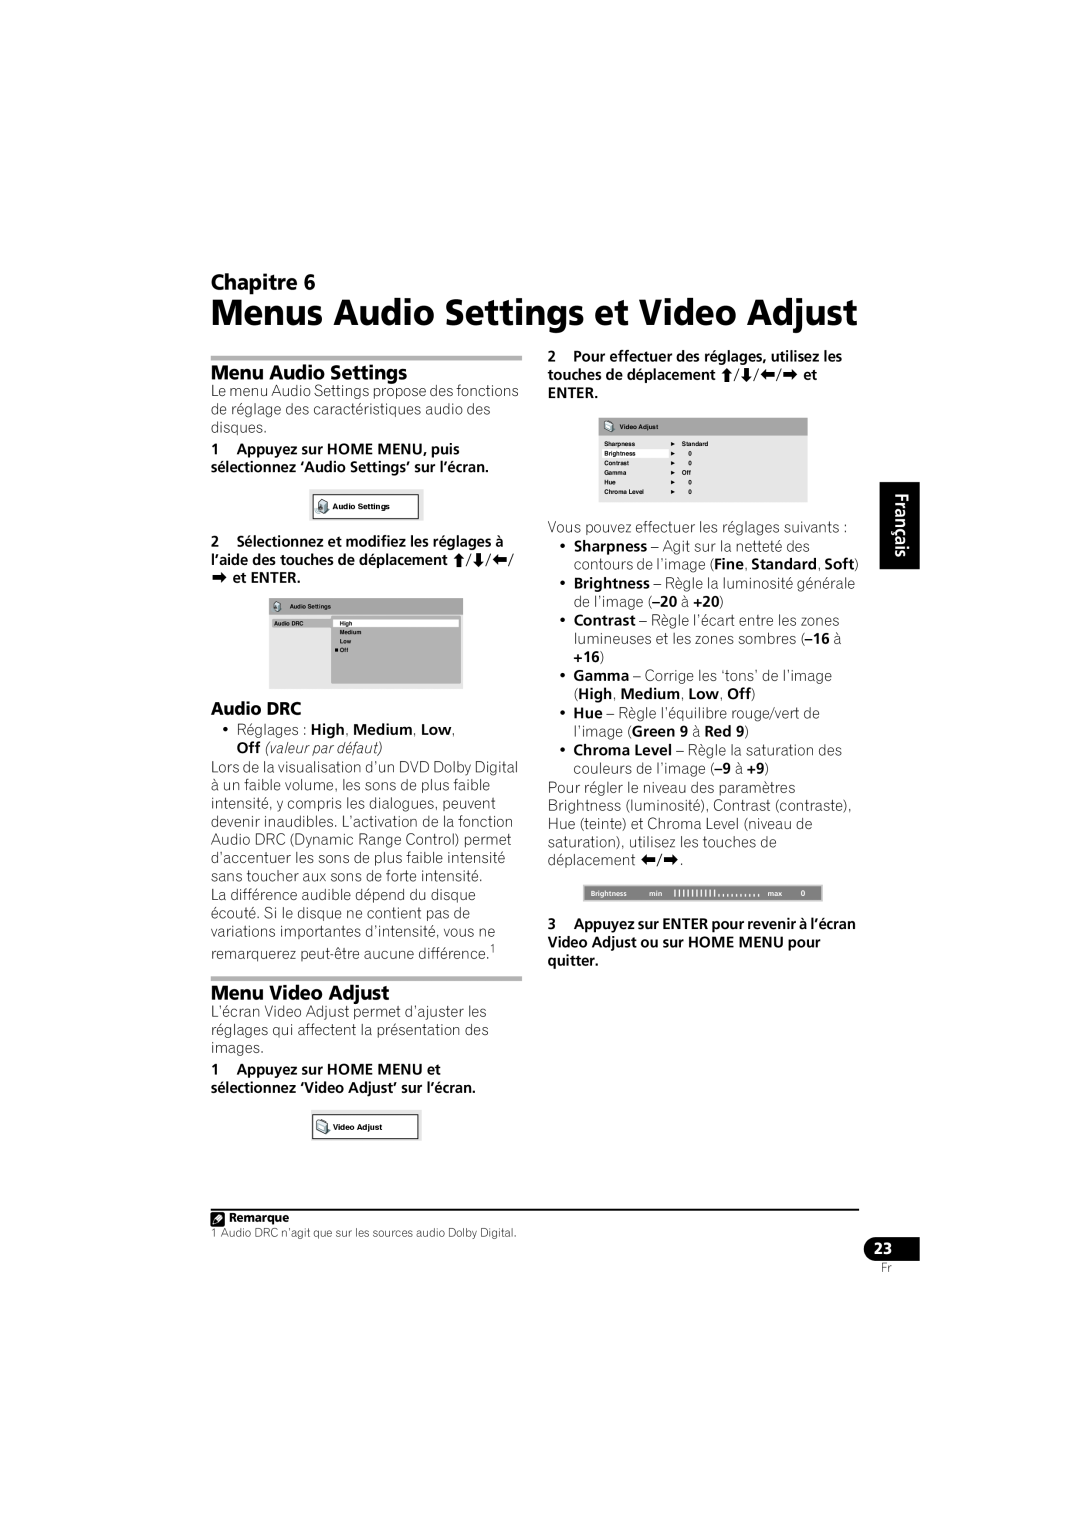 Pioneer HTZ-360DV manual Menus Audio Settings et Video Adjust, Menu Audio Settings, Menu Video Adjust, Chapitre, Audio DRC 